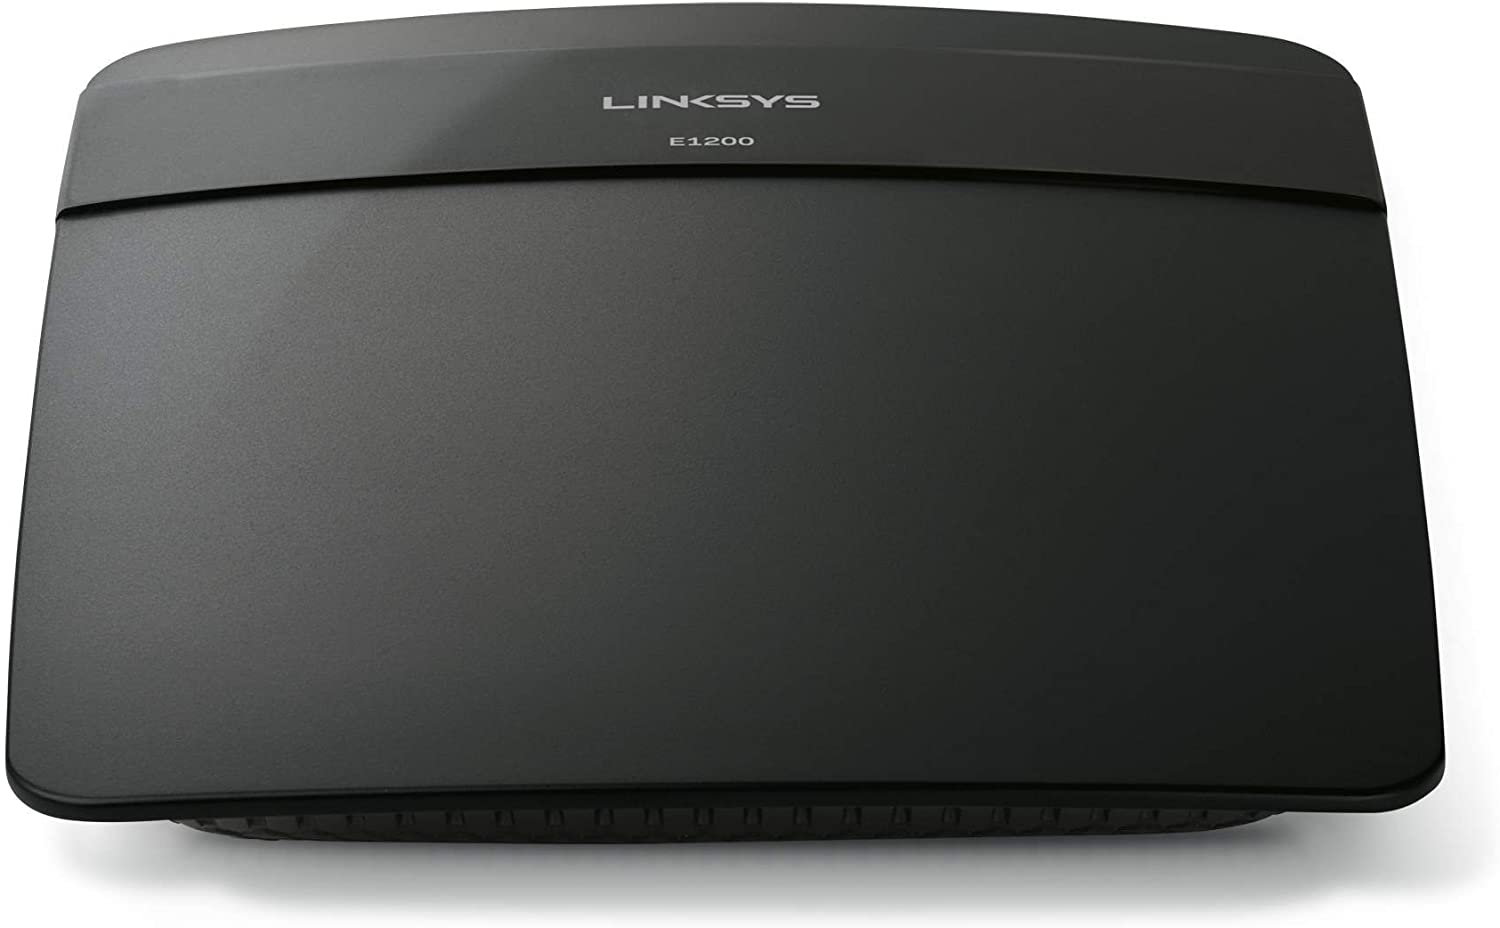 Linksys E1200 Wi-Fi Router